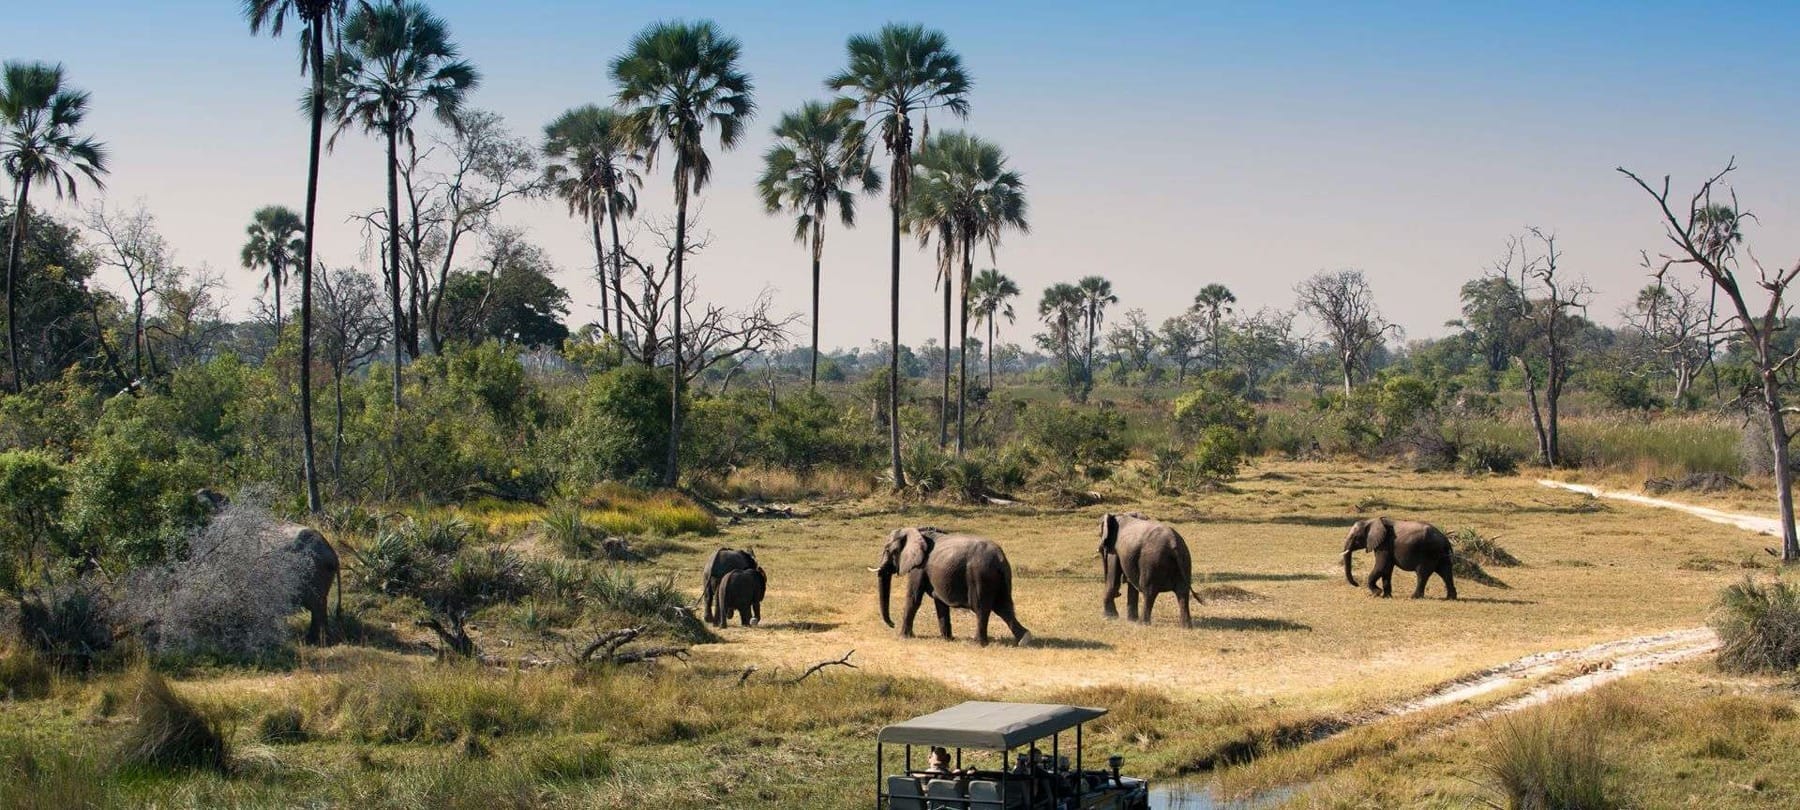 Nxai National Park is one oof Botswana's many drawcards